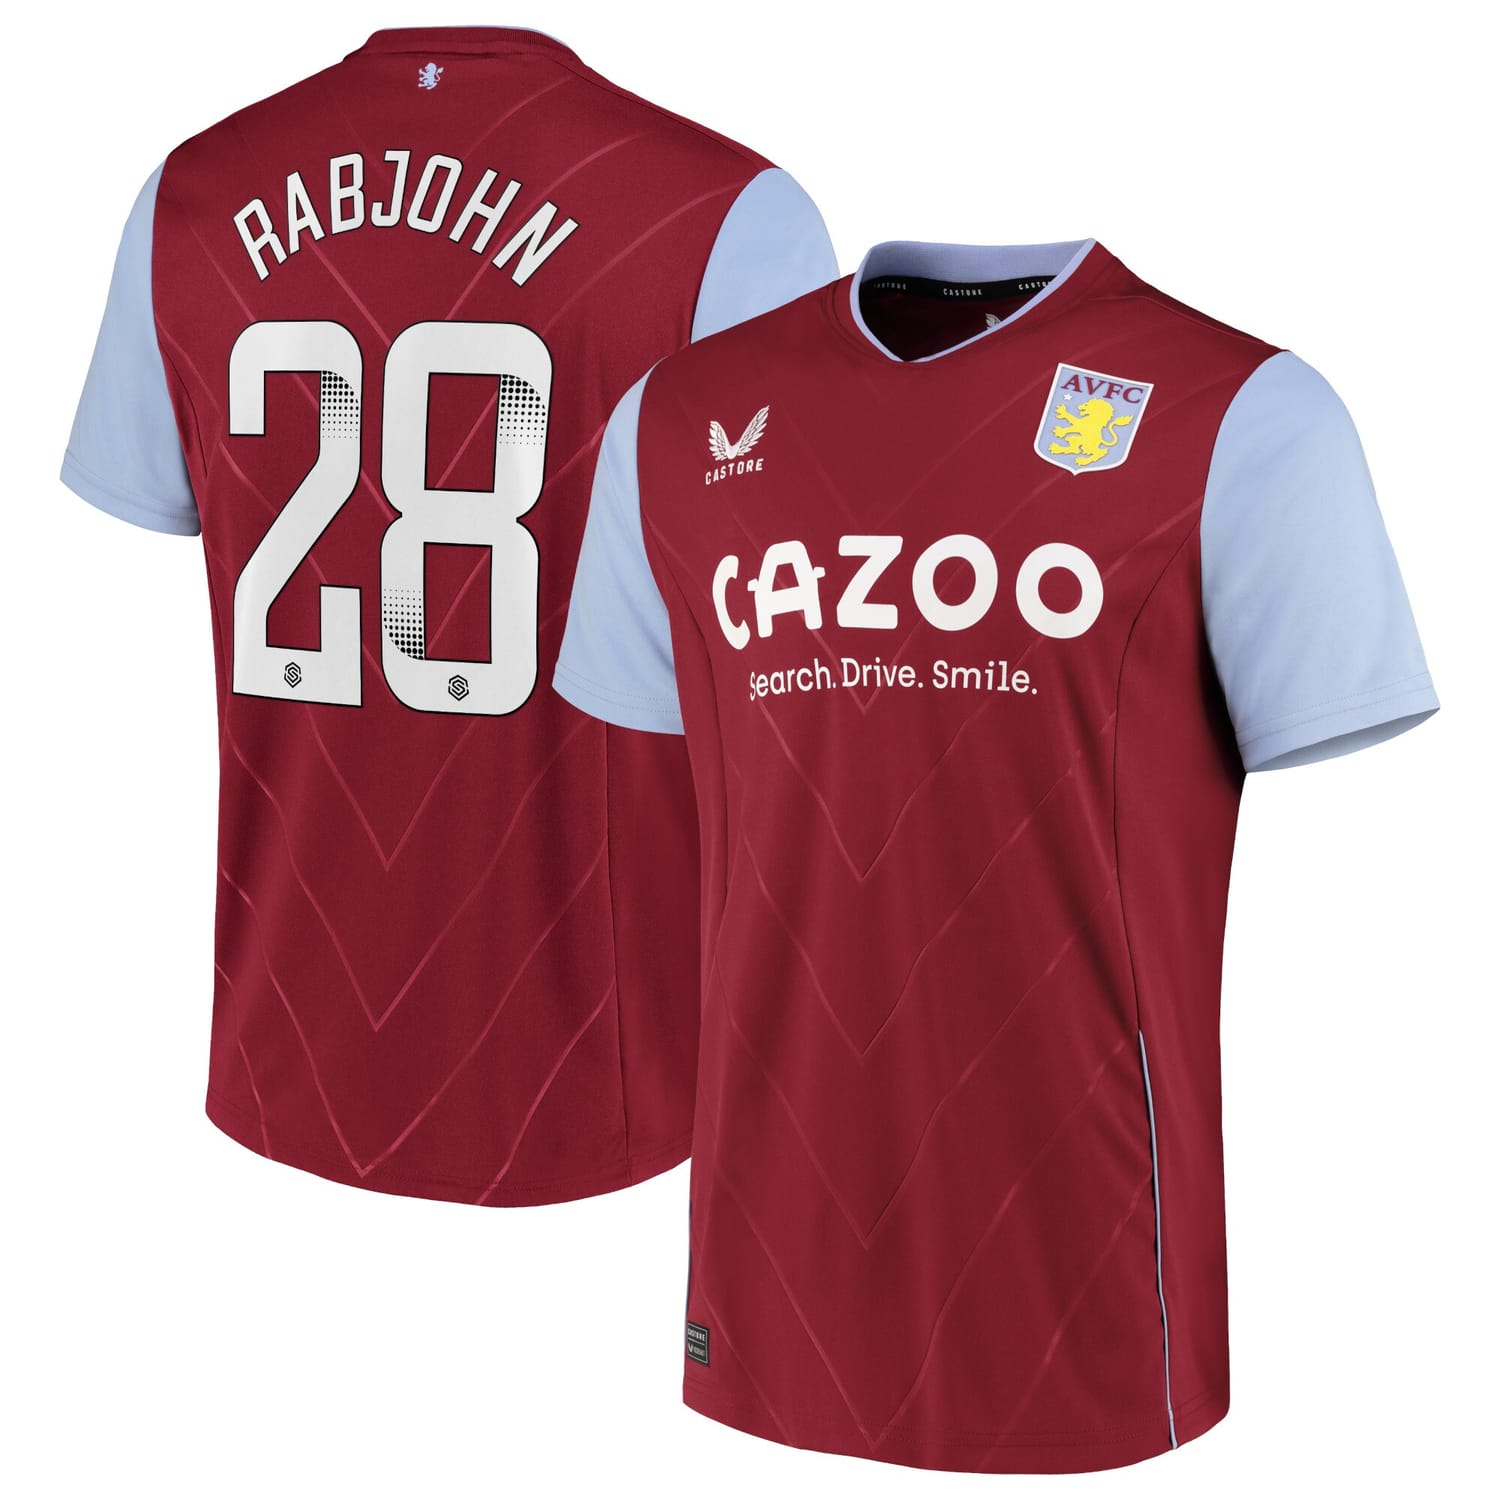 Premier League Aston Villa Home Jersey Shirt 2022-23 player Evie Rabjohn 28 printing for Men